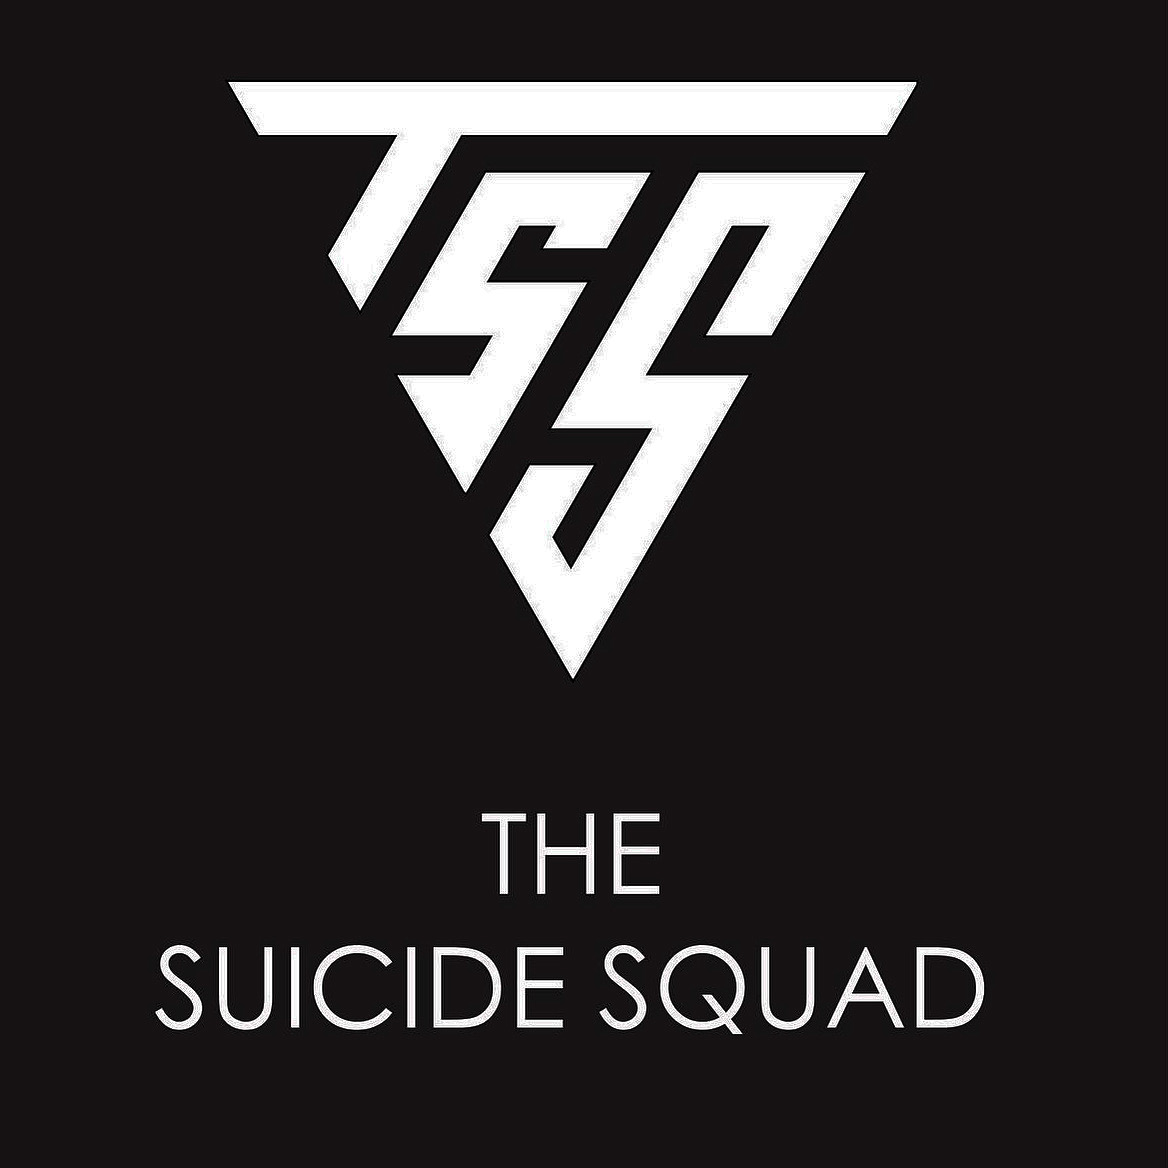 The suicide squad Esports